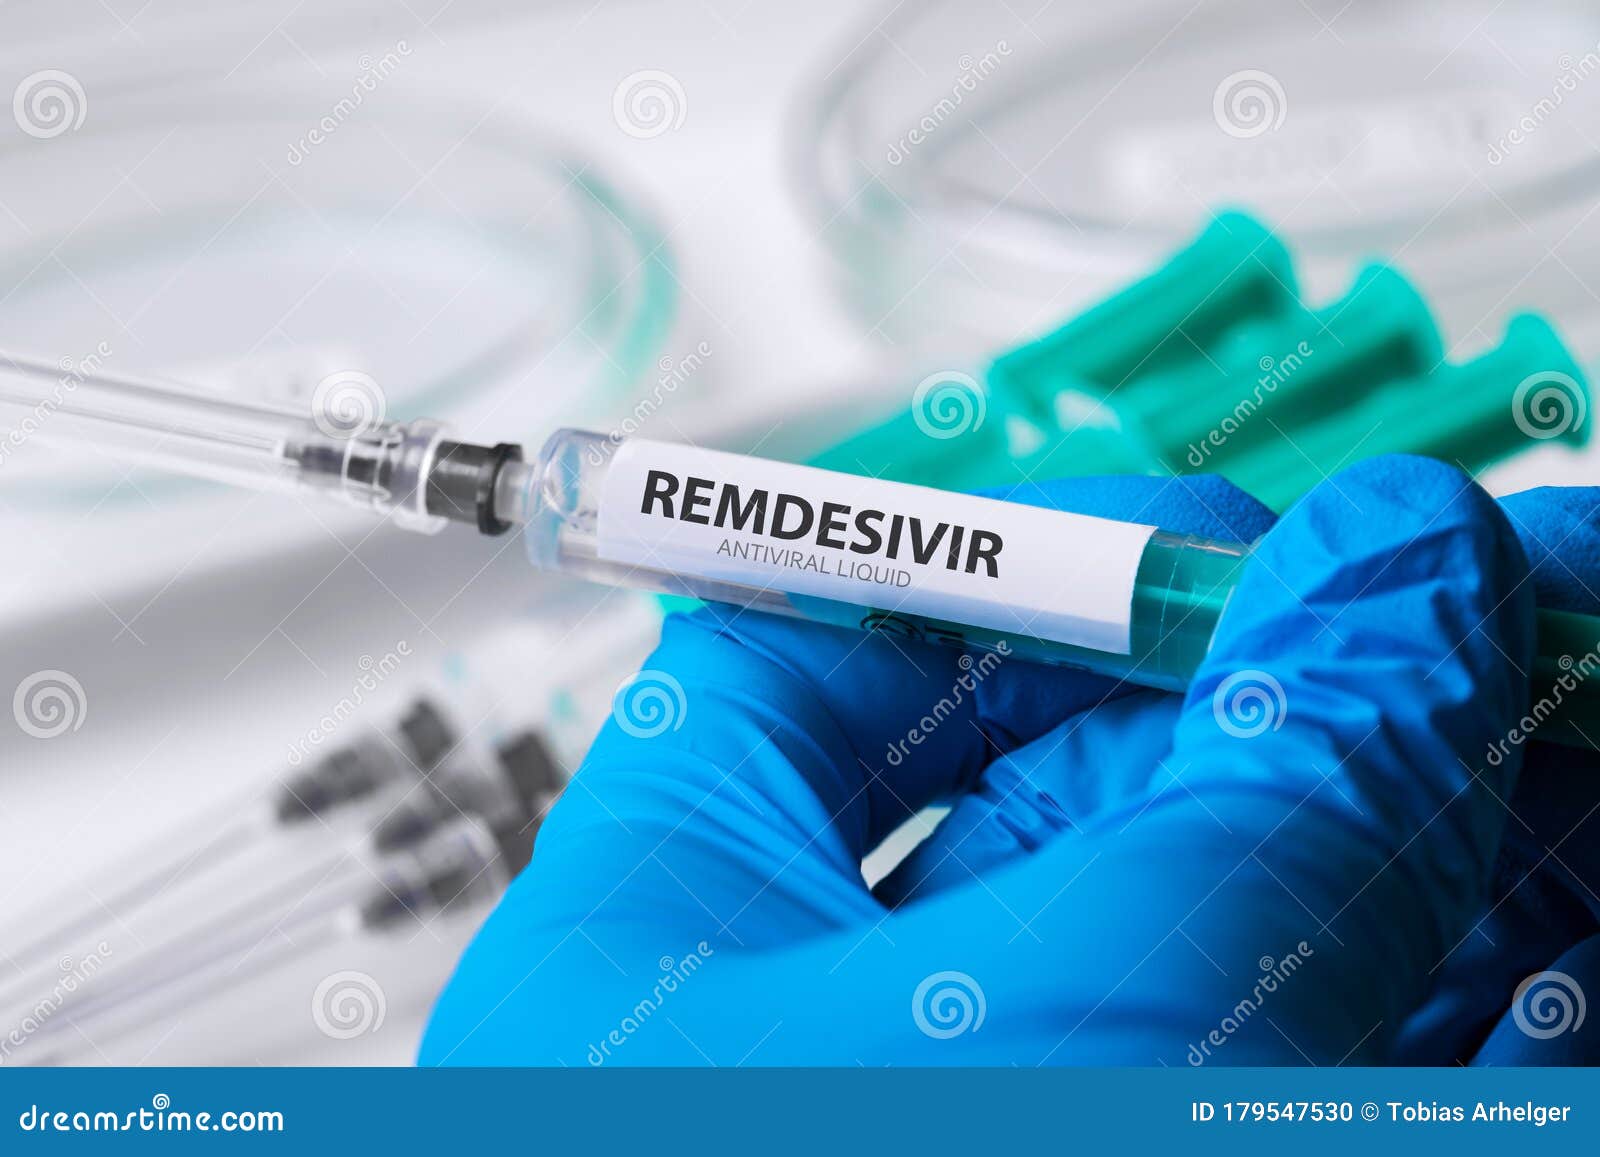 remdesivir covid-19 liquid medication background